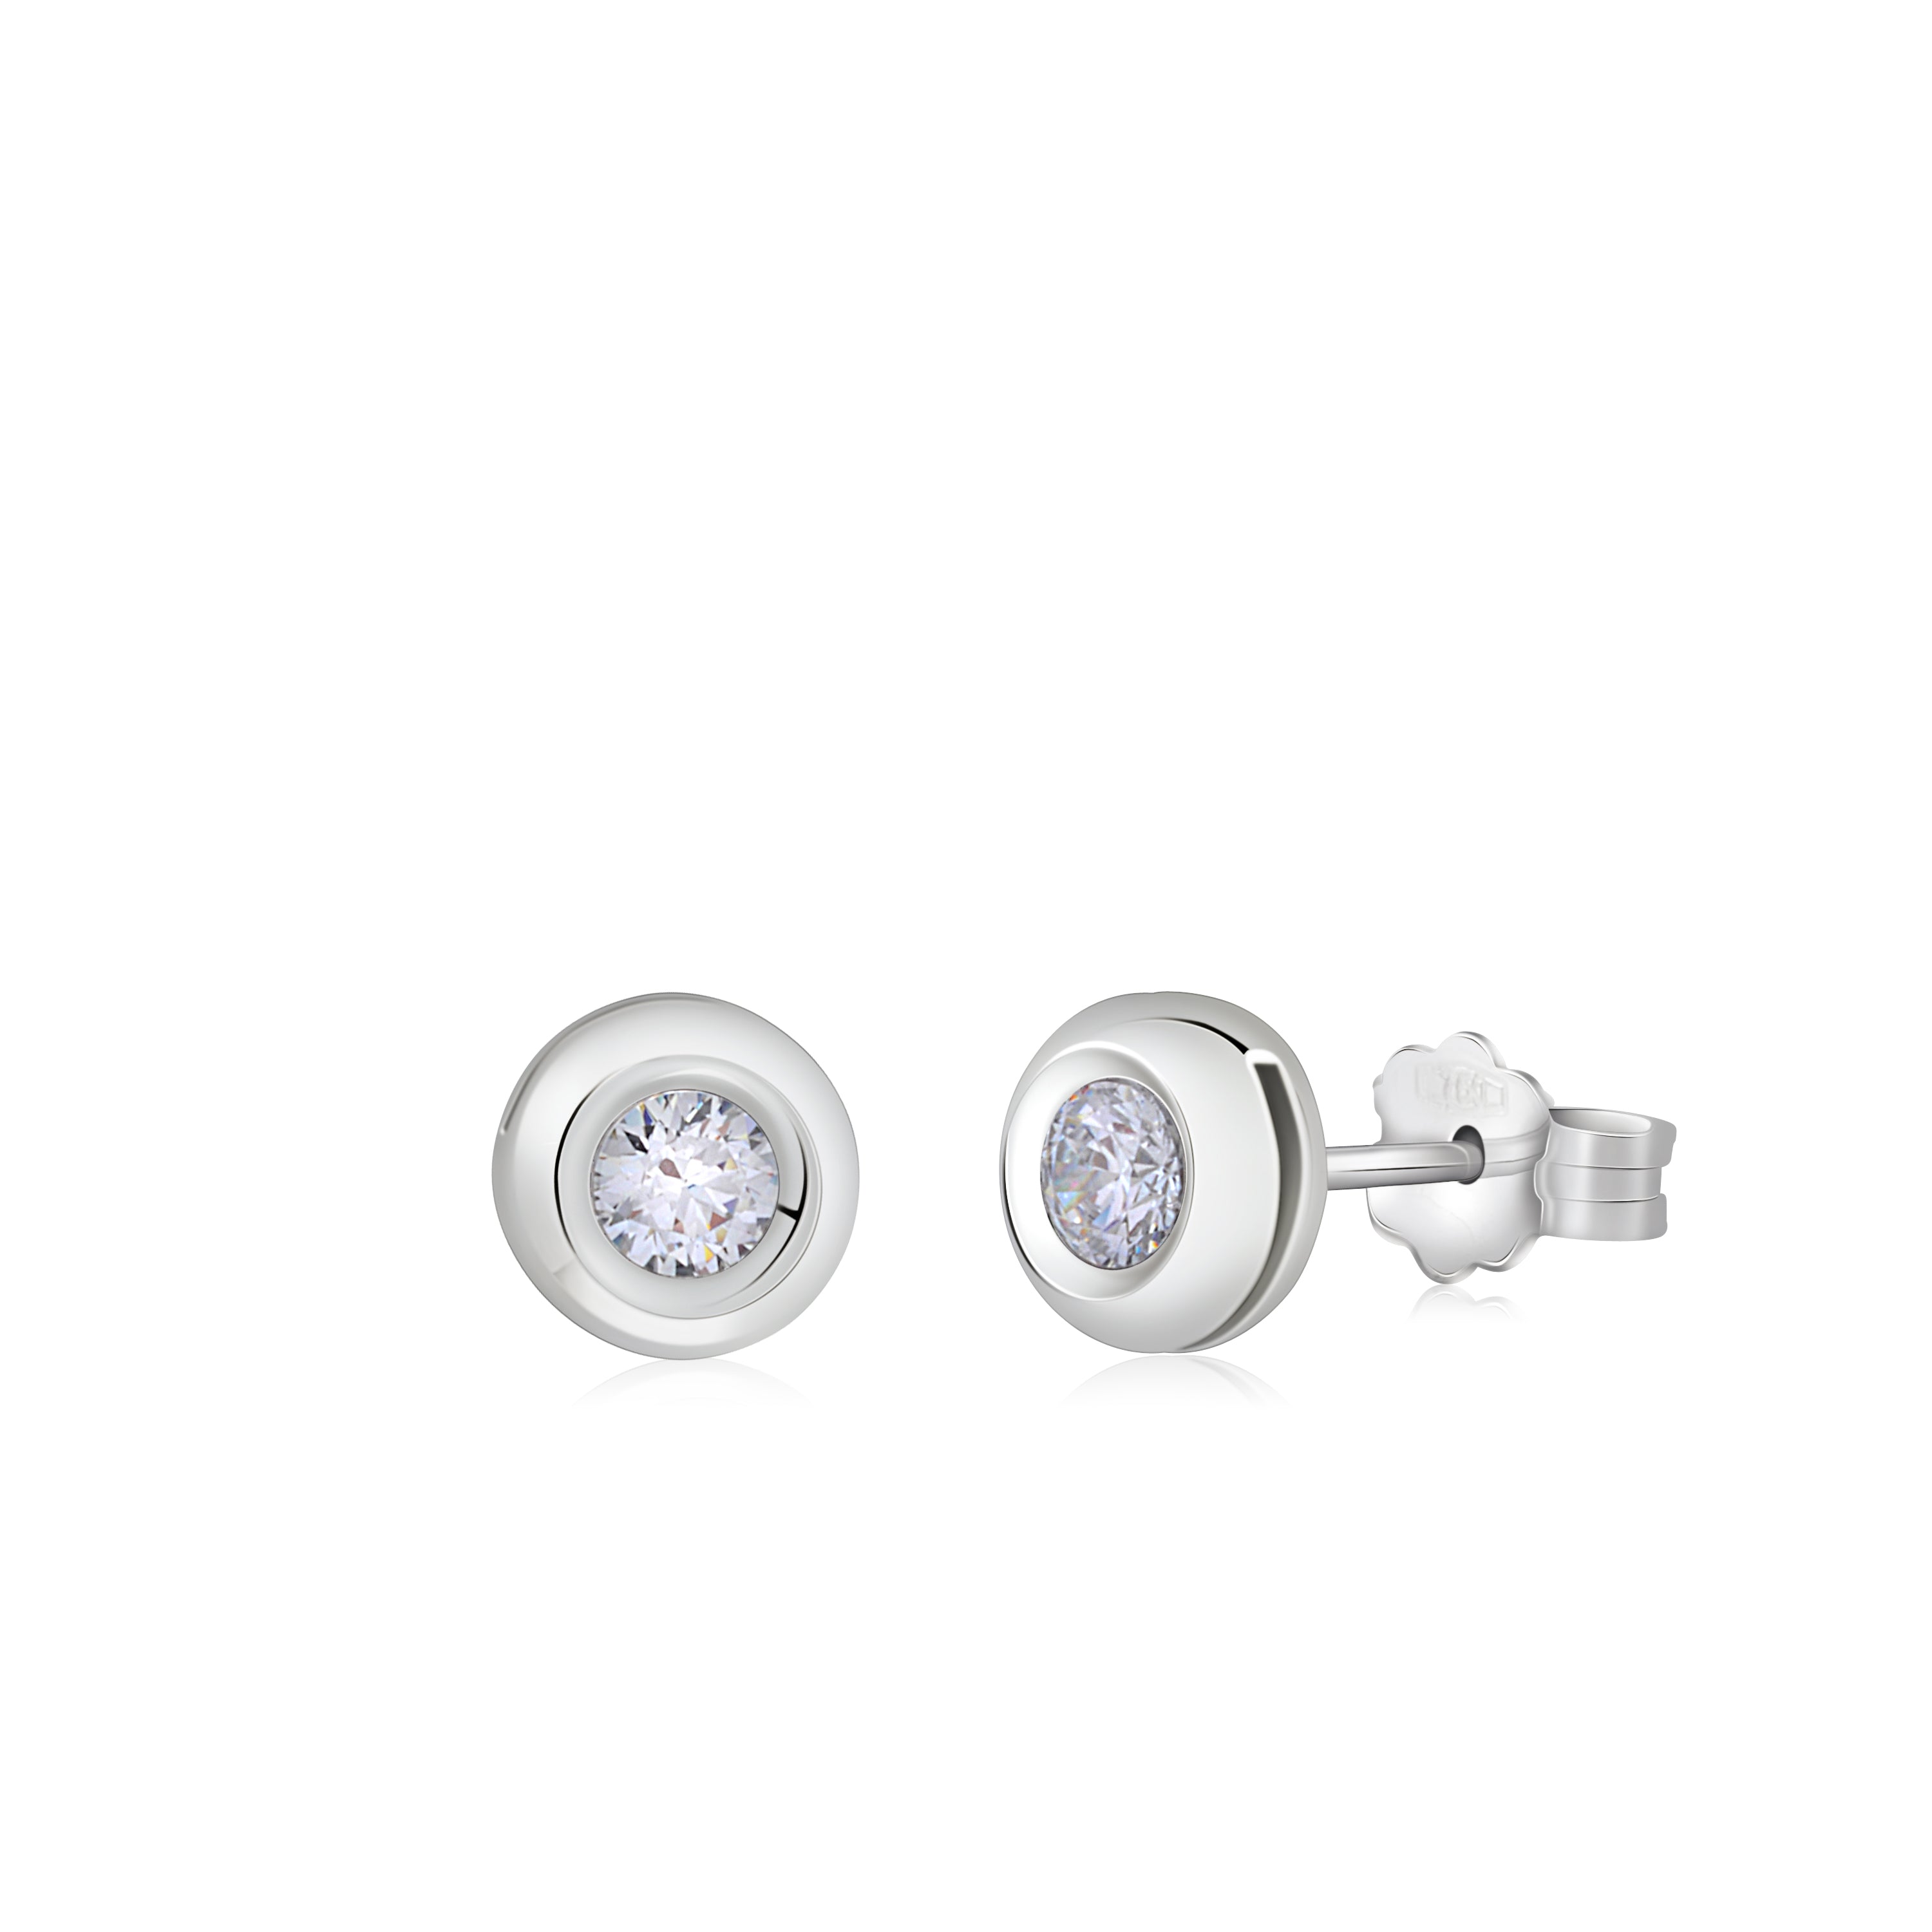 UNICORNJ 14K White Gold Bevel Set CZ Simulated Diamond Post Stud Earrings 6.5mm Italy